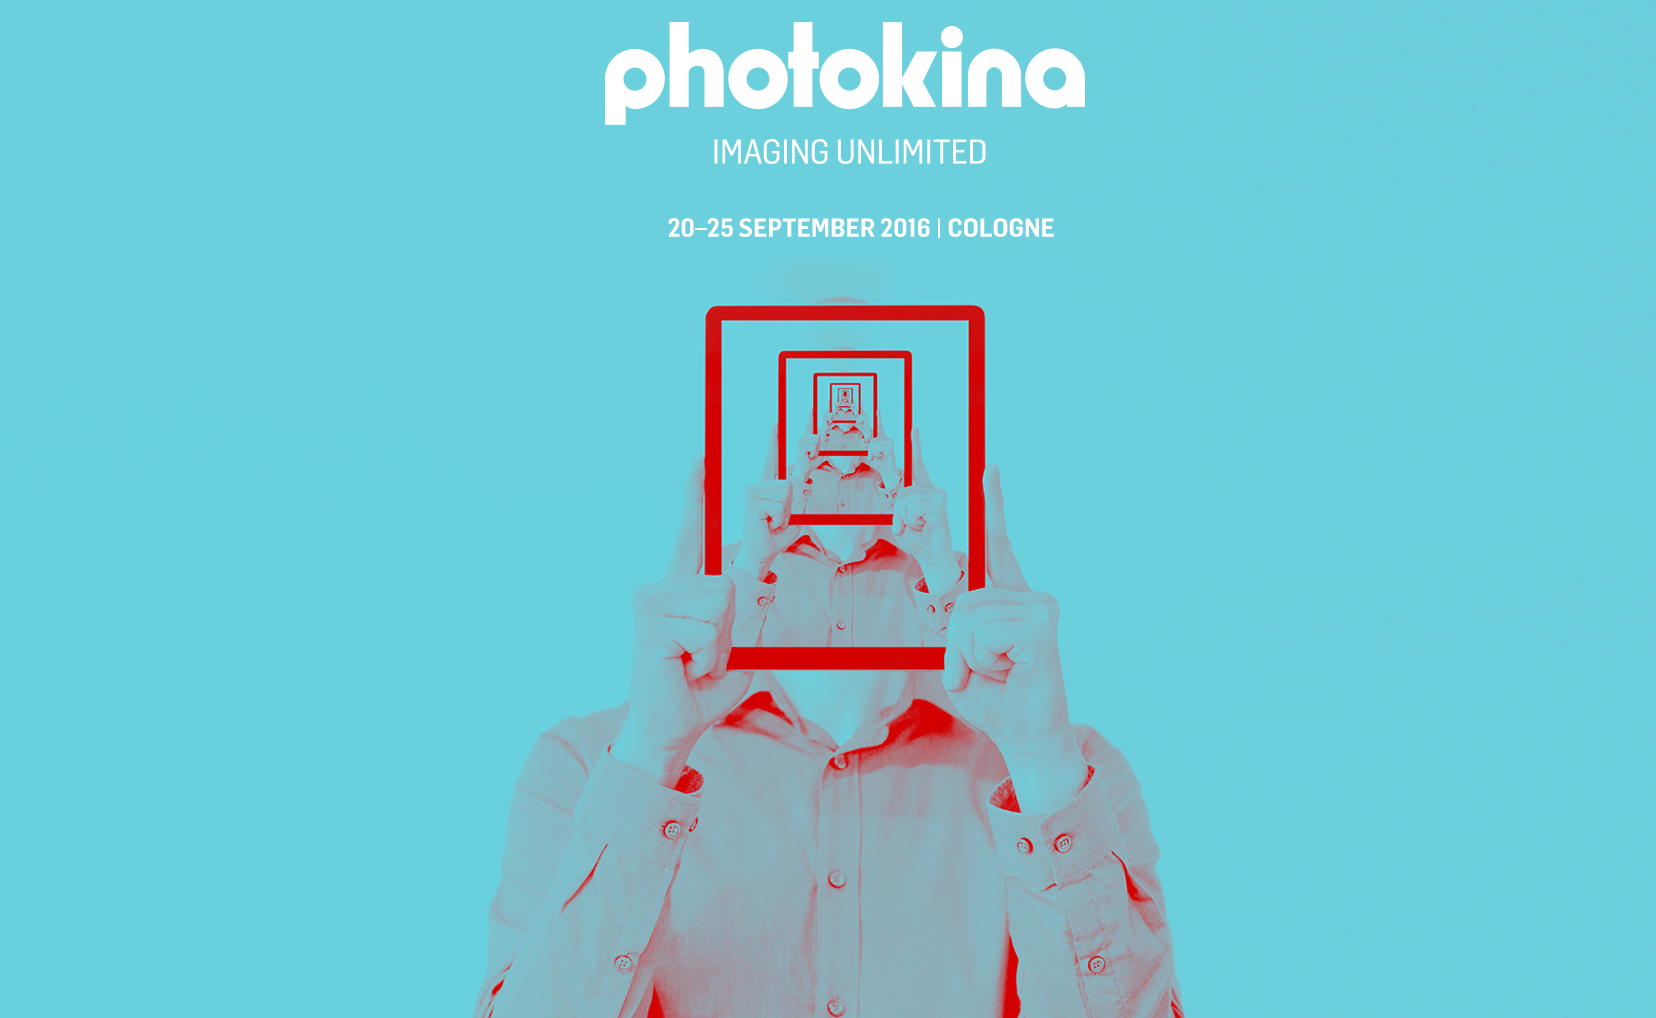 New meeting place is waiting: Photokina'16